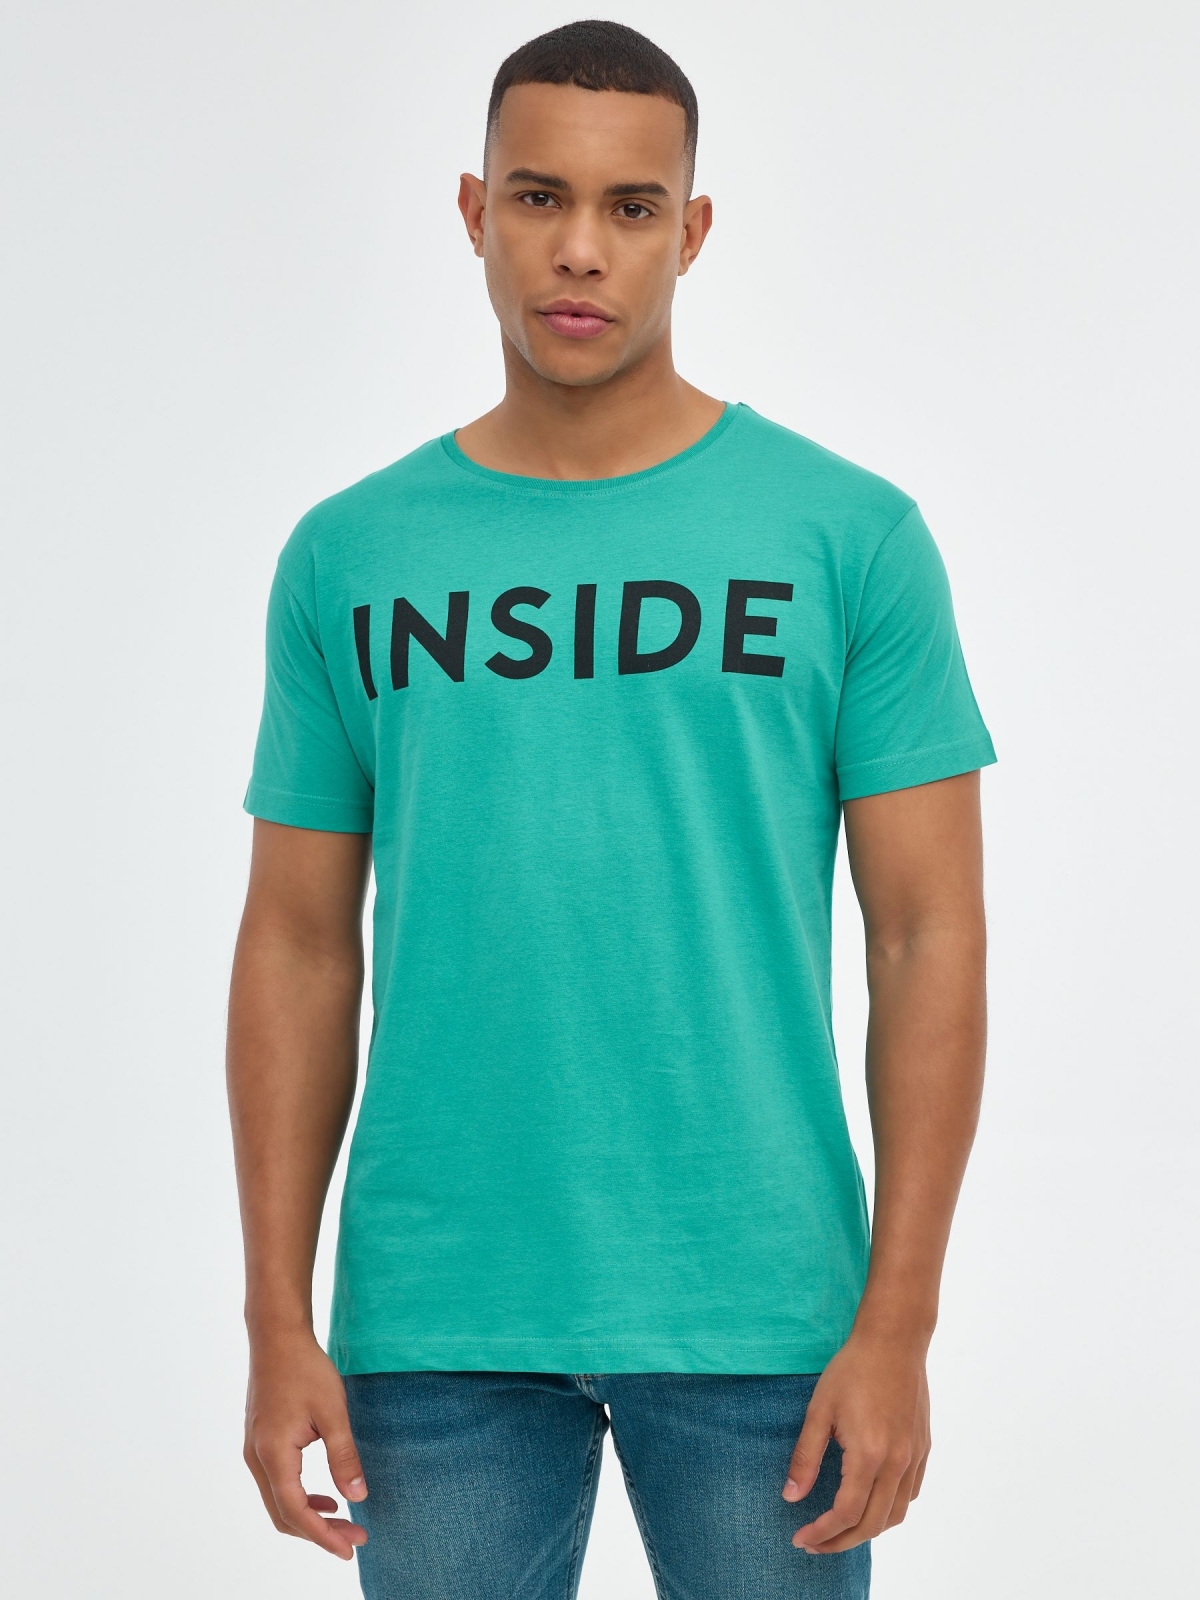 Camiseta básica "INSIDE" verde agua vista media frontal